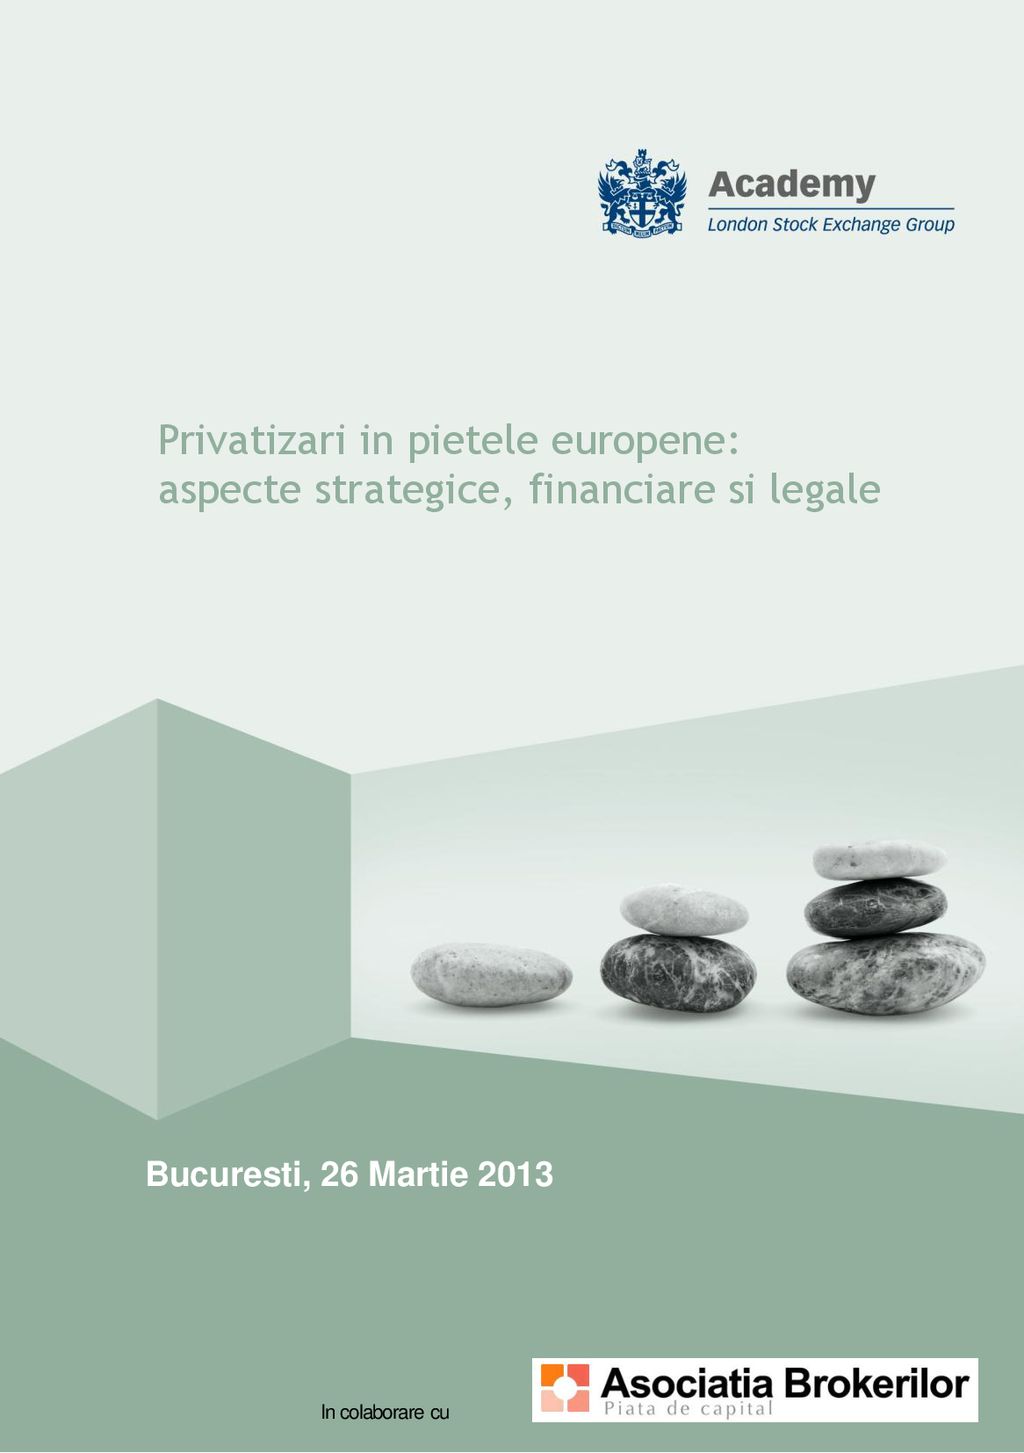 Privatizari in pietele europene: aspecte strategice, financiare si legale